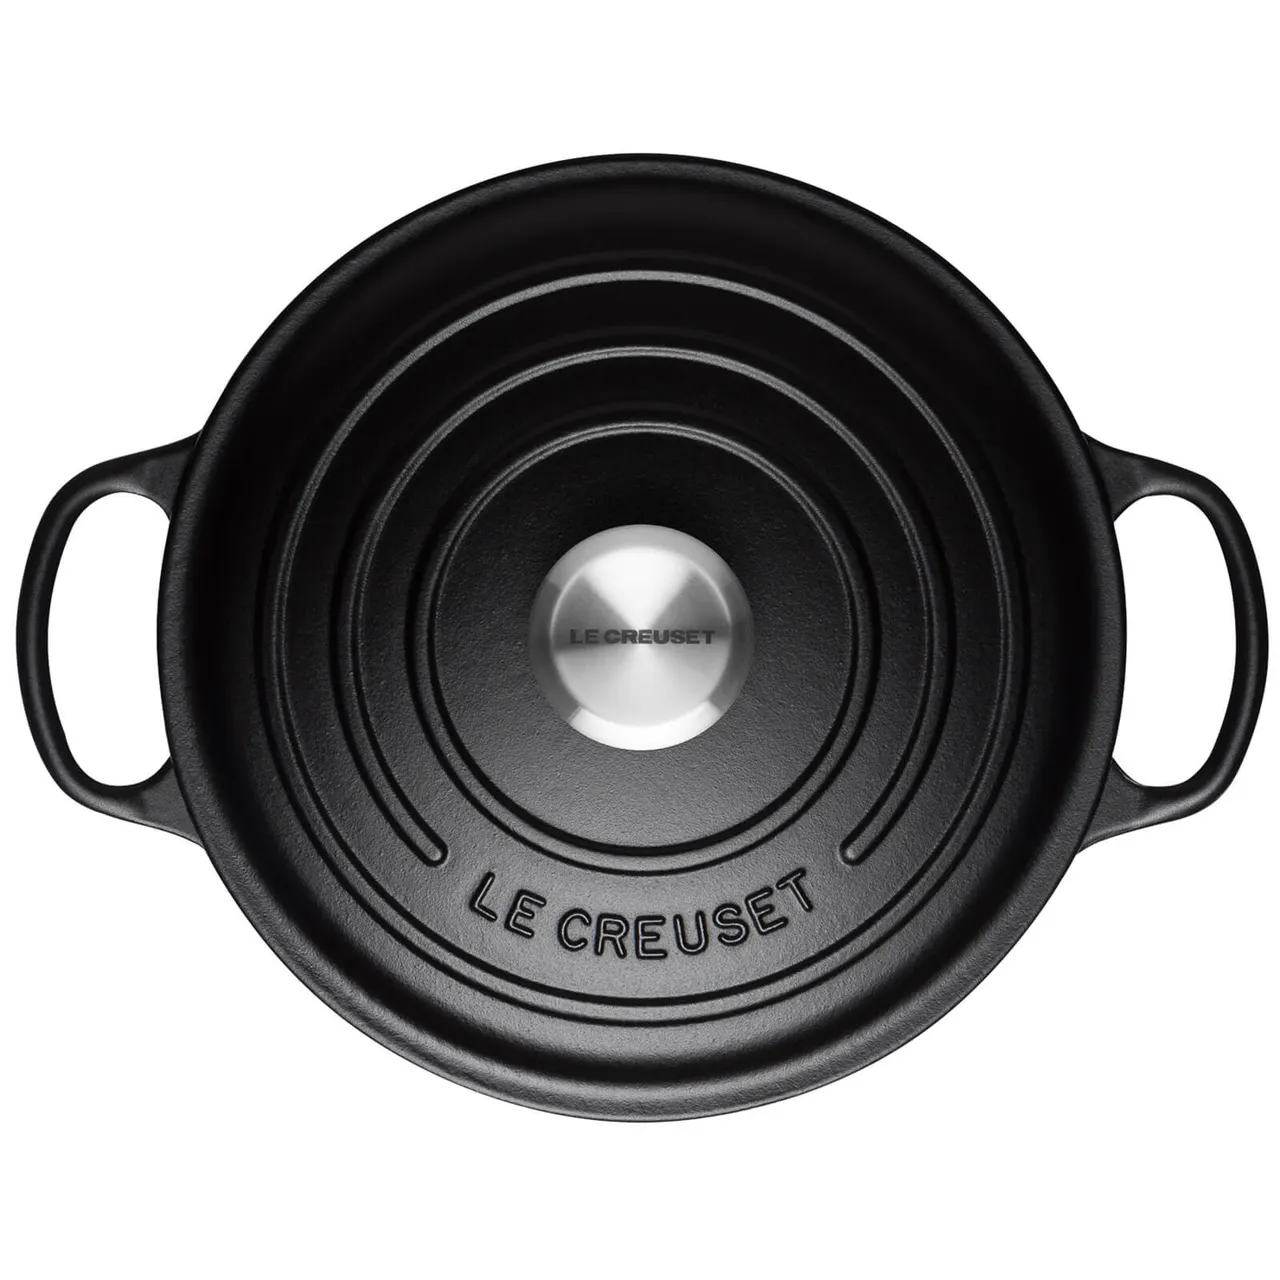 Le Creuset Signature Cast Iron Round Casserole Dish - 20cm - Satin Black